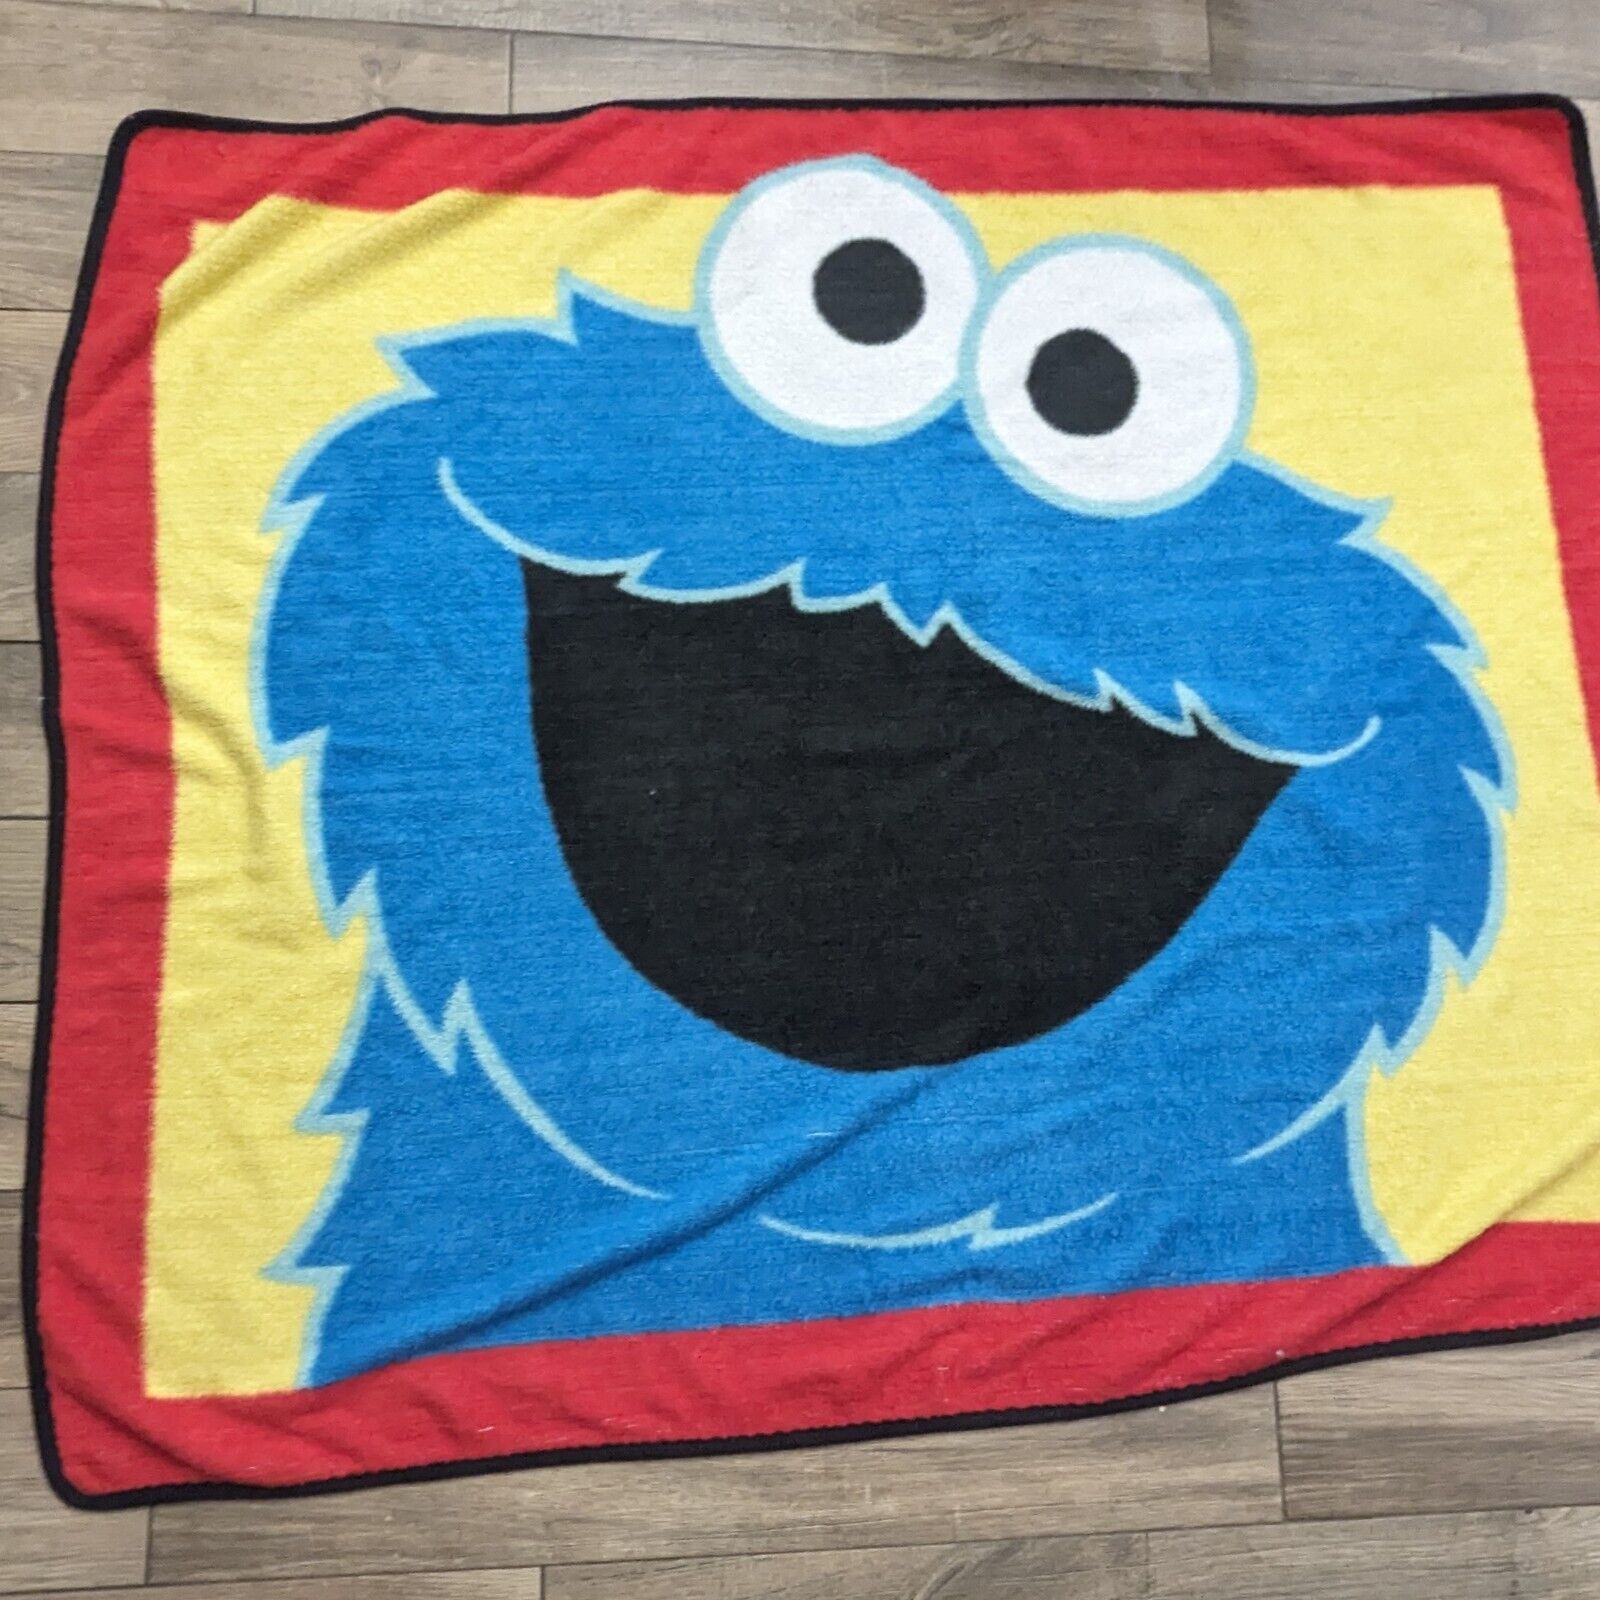 Vintage Owen Sesame Street Cookie Monster Fleece Blanket 90's red yellow blue - $74.00